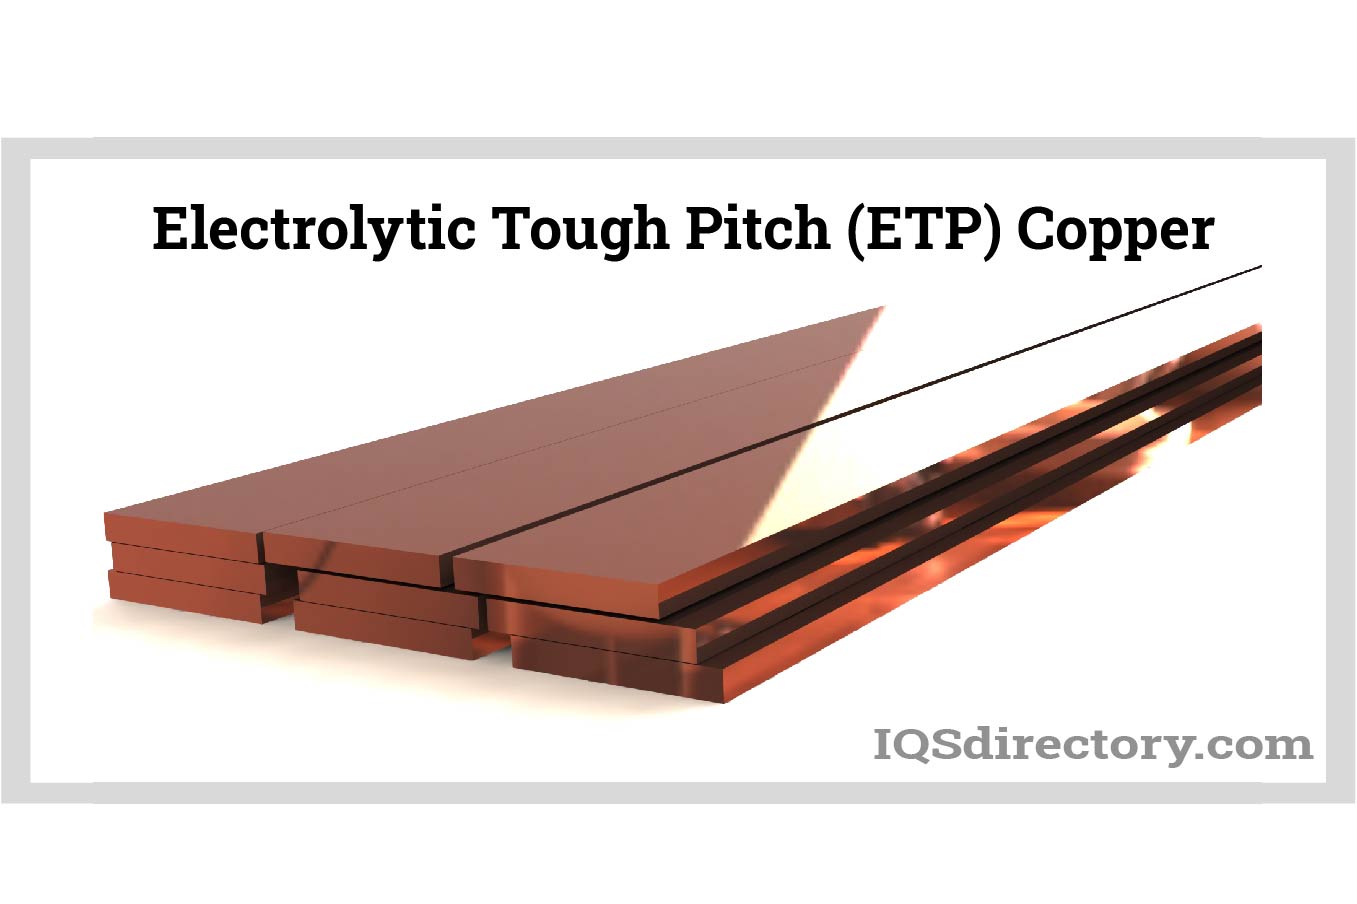 Electrolytic Tough Pitch Copper